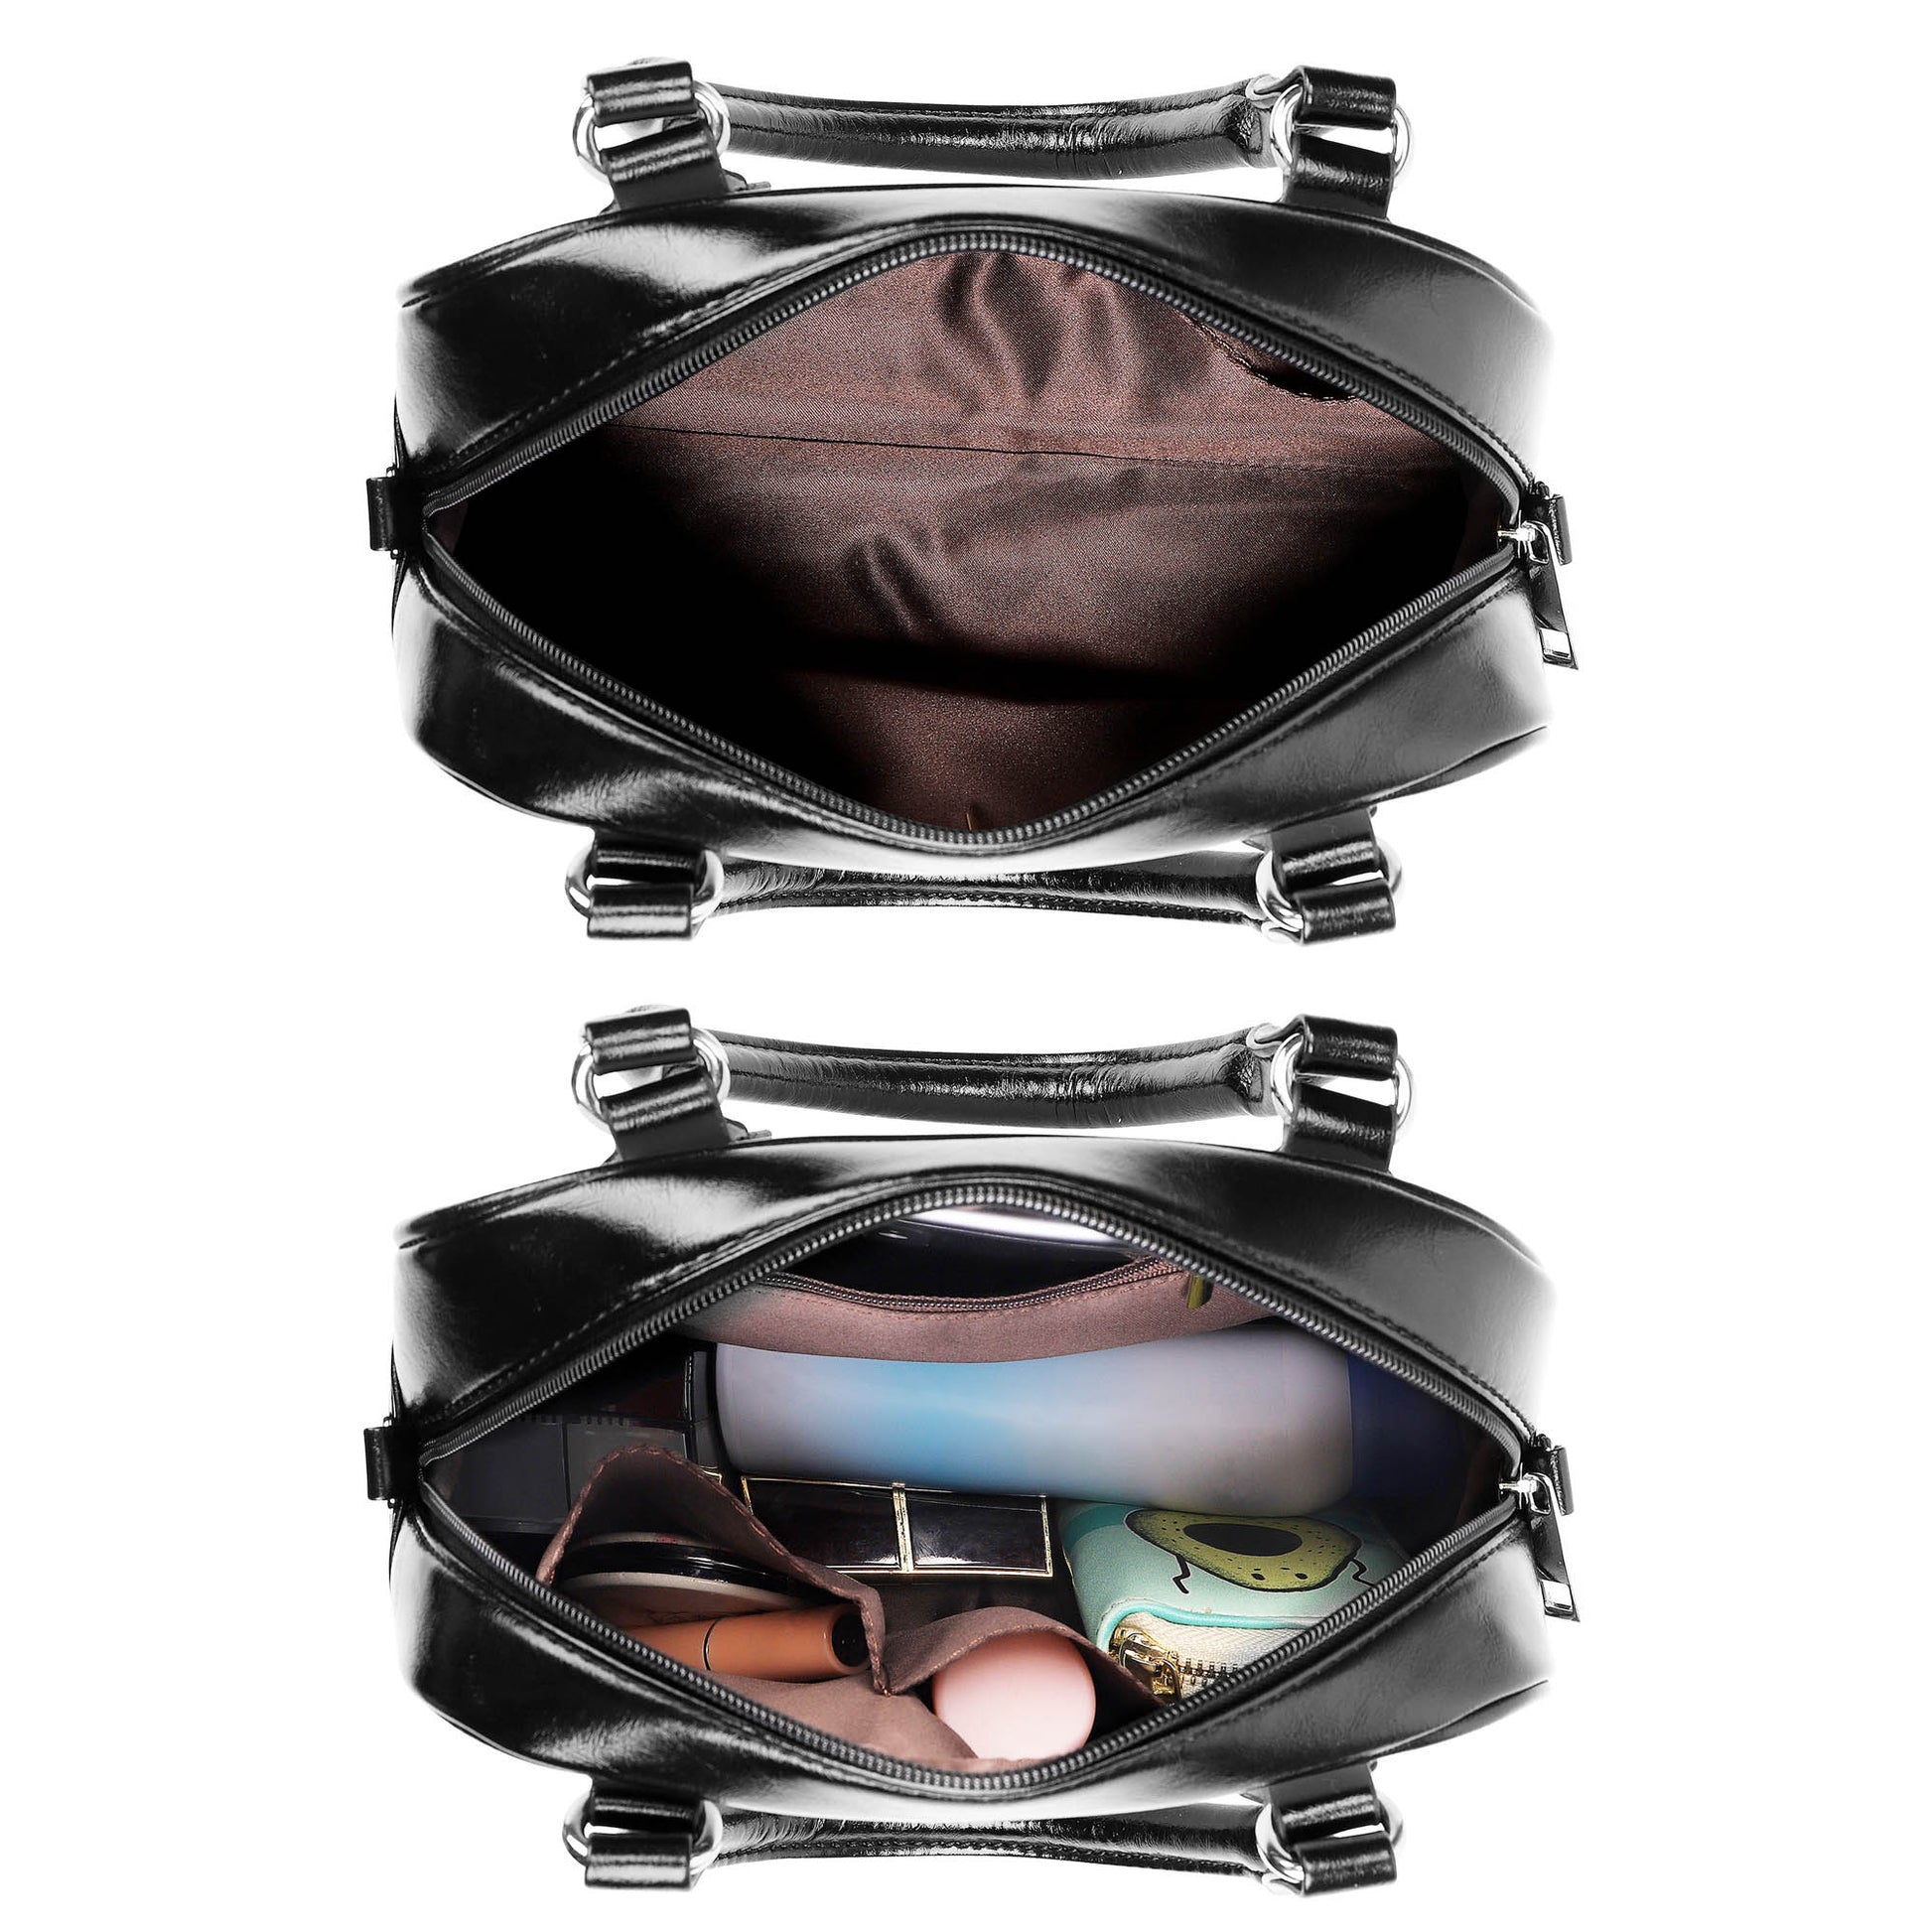 MacGillivray Modern Tartan Shoulder Handbags with Family Crest - Tartanvibesclothing